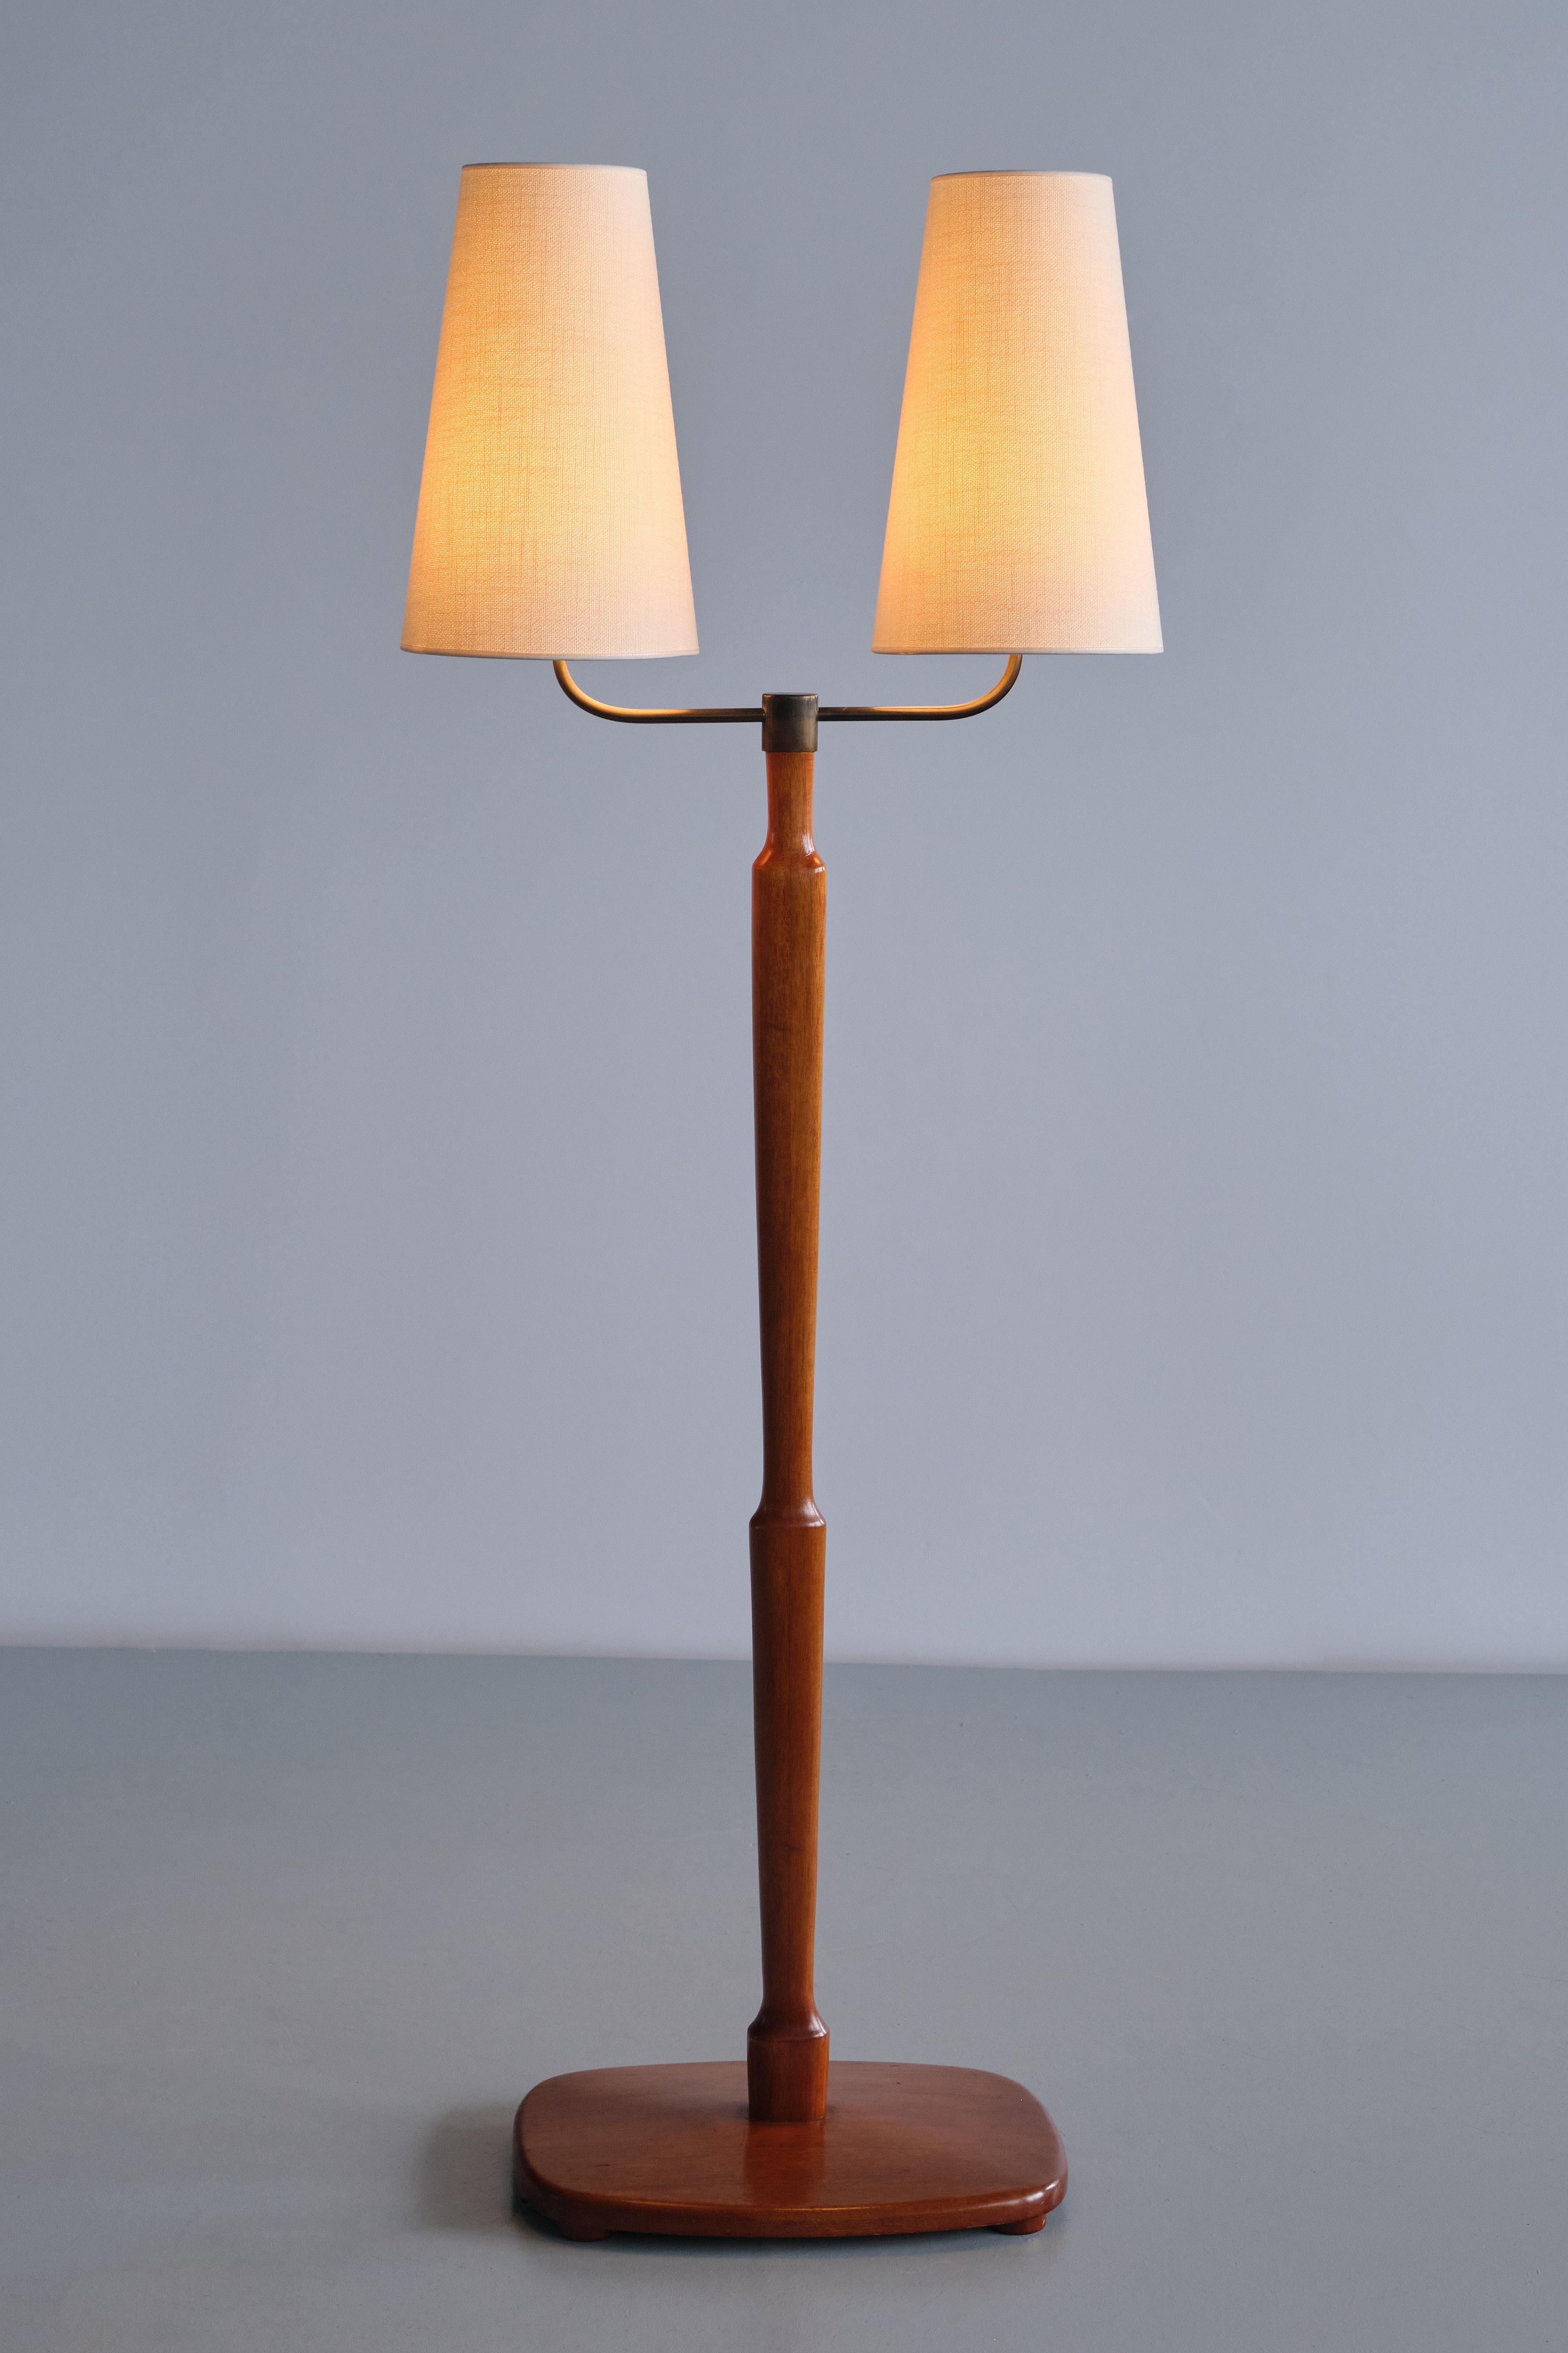 Scandinavian Modern Swedish Modern Two Arm Floor Lamp in Teak Wood and Brass, Sweden, Late 1940s For Sale